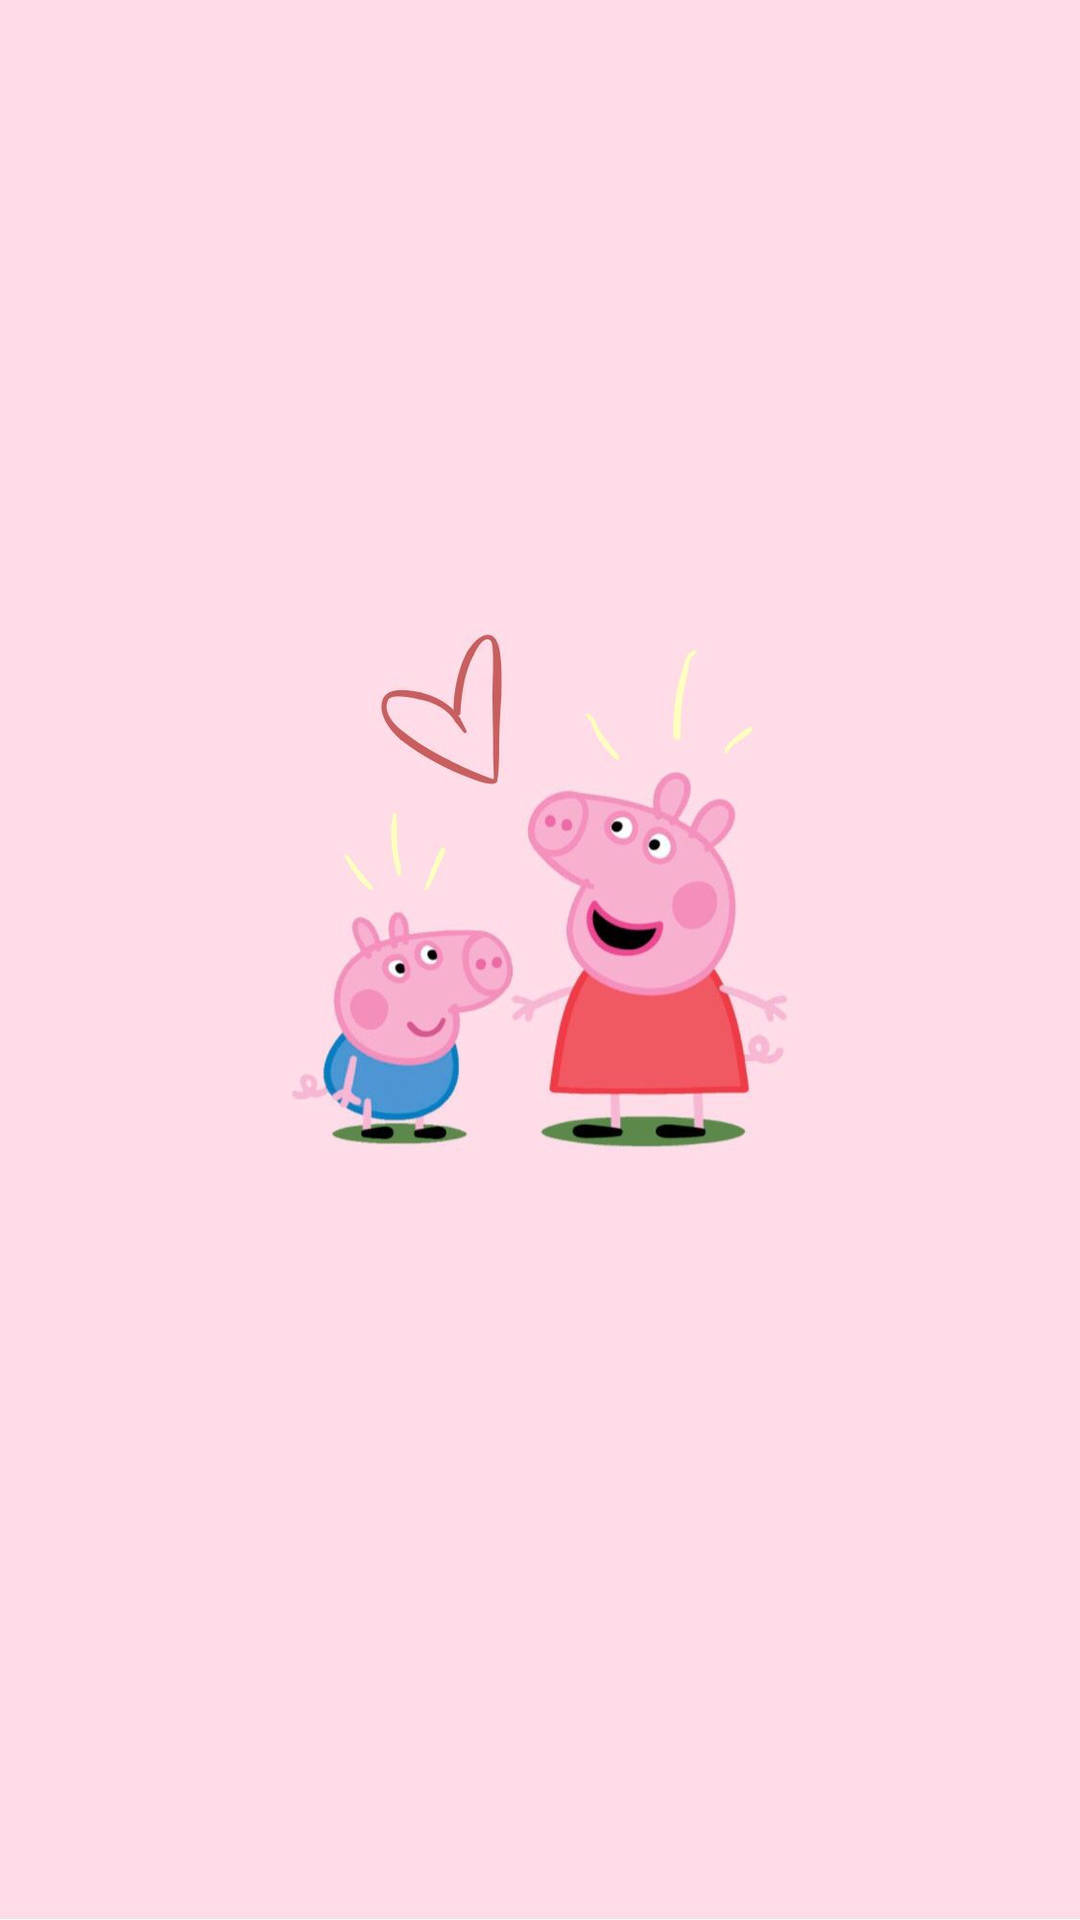 George And Peppa Pig